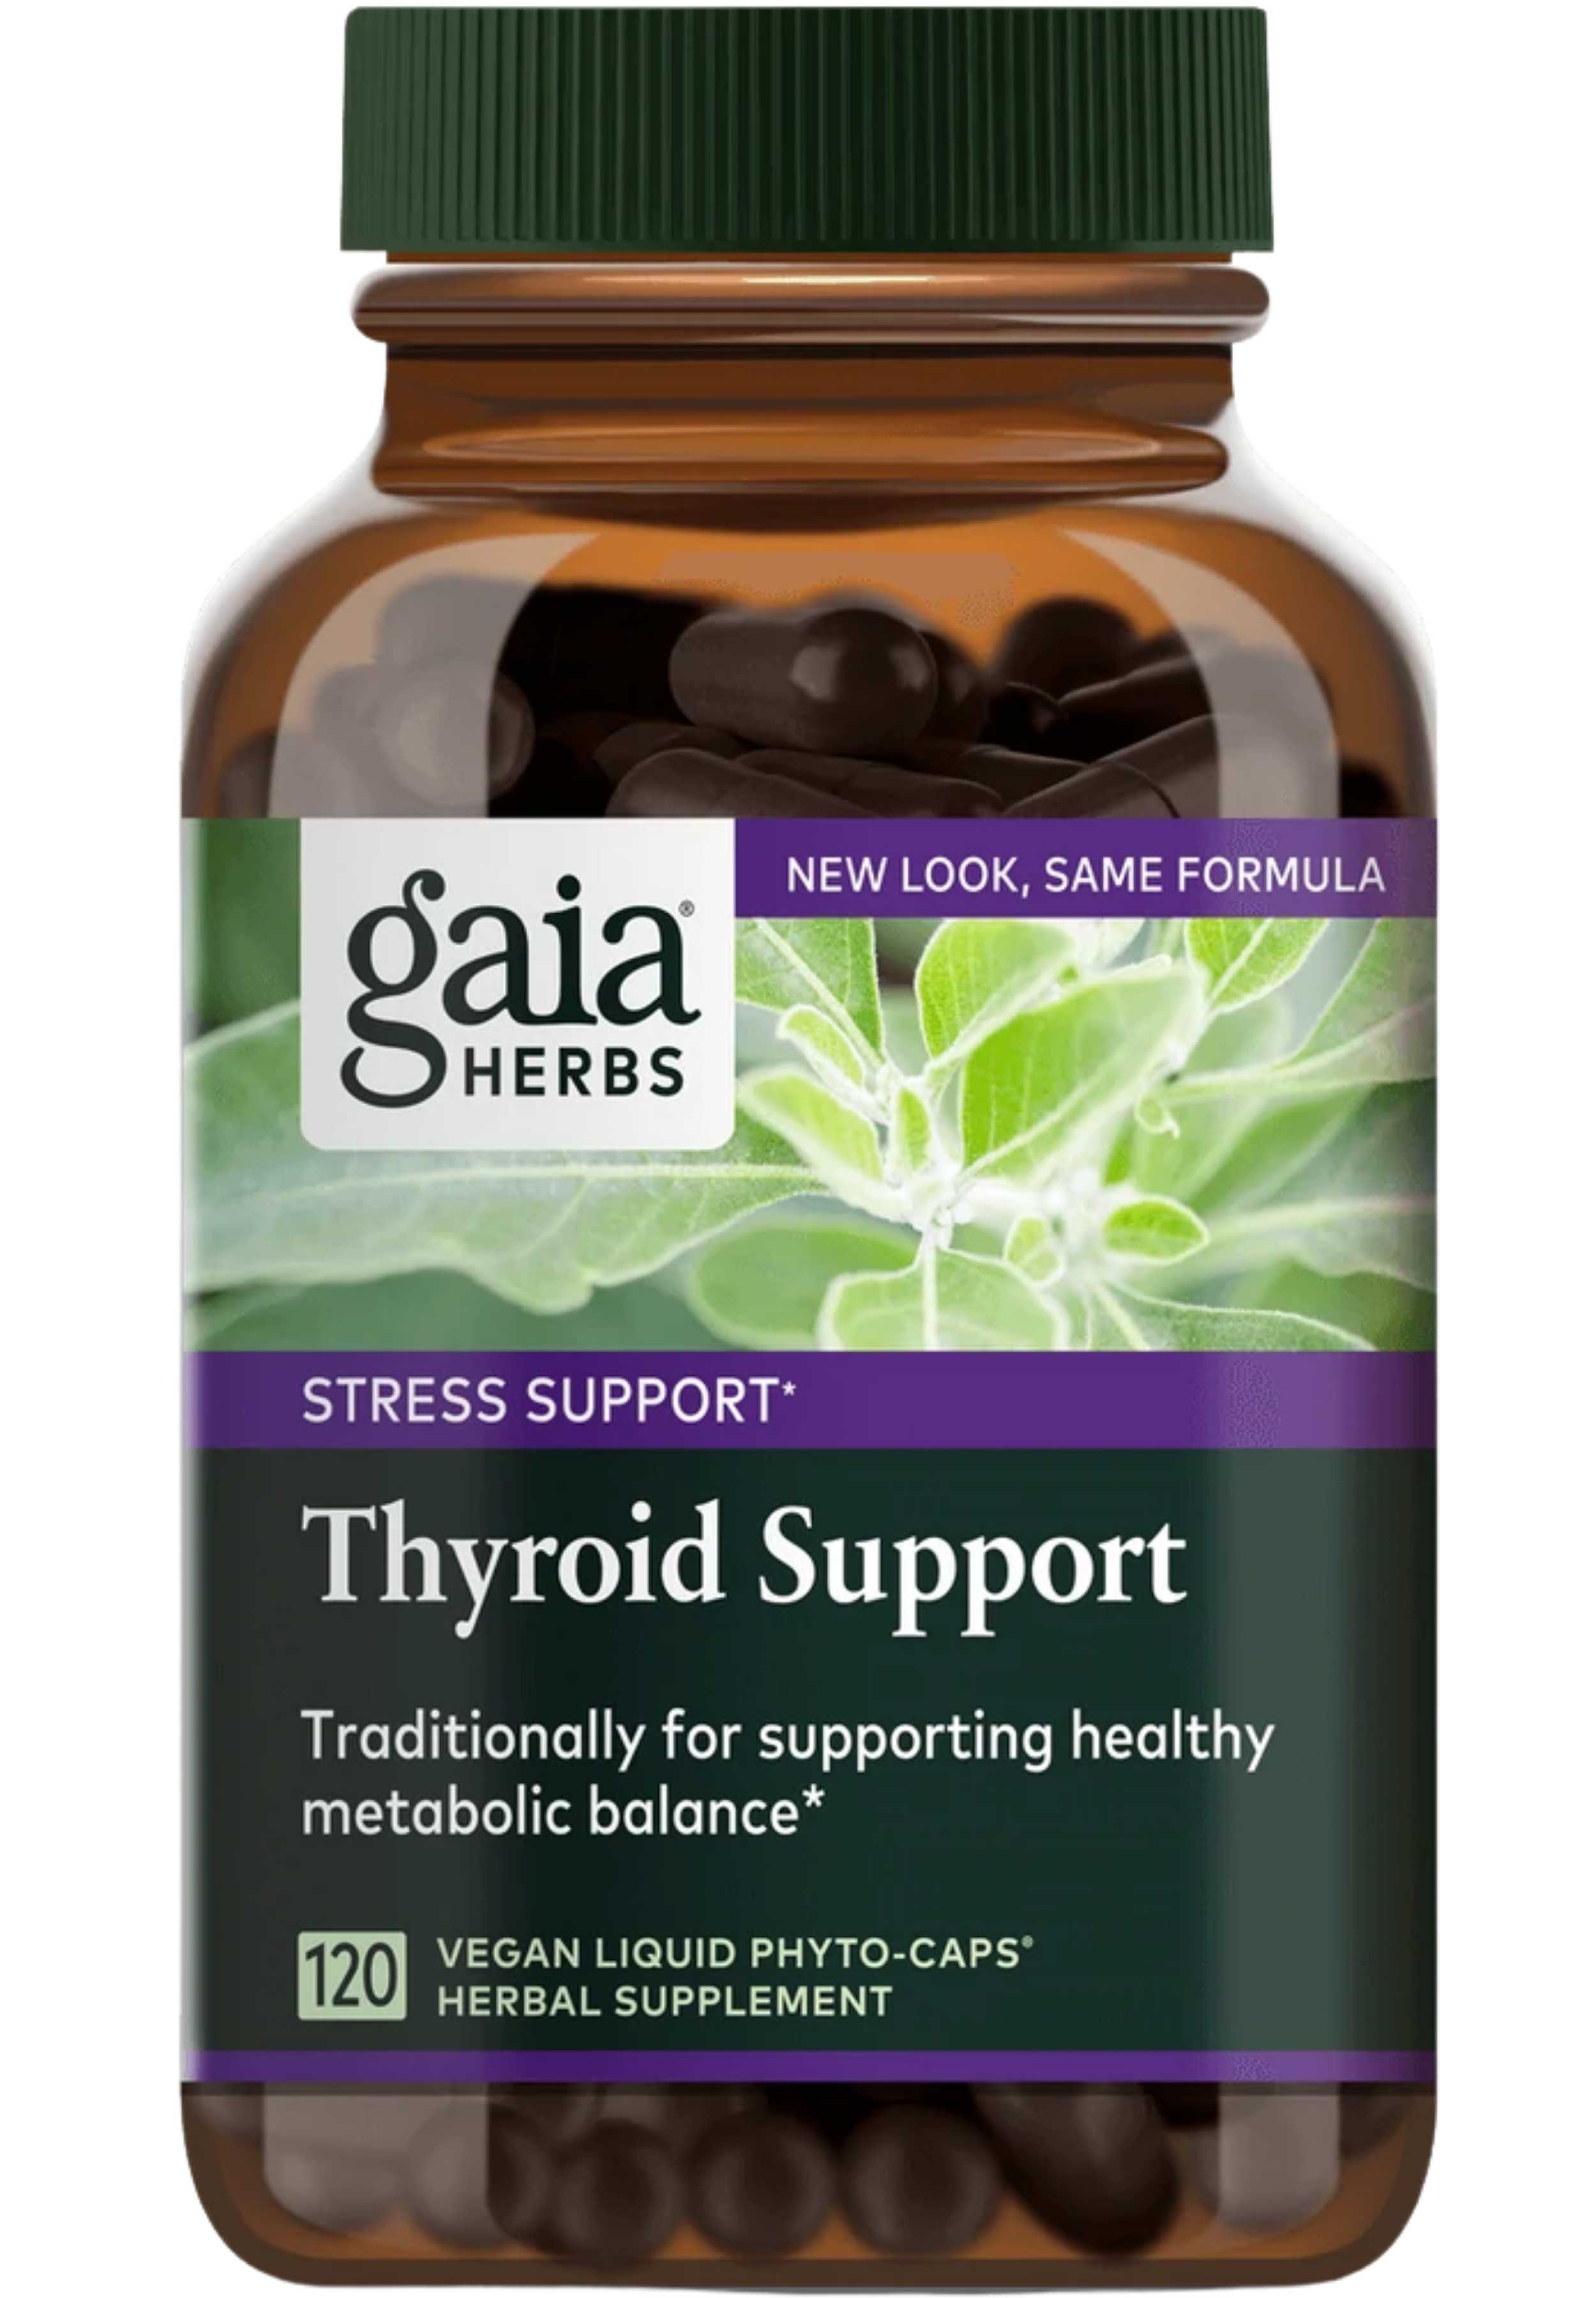 Gaia Herbs Thyroid Support Capsules